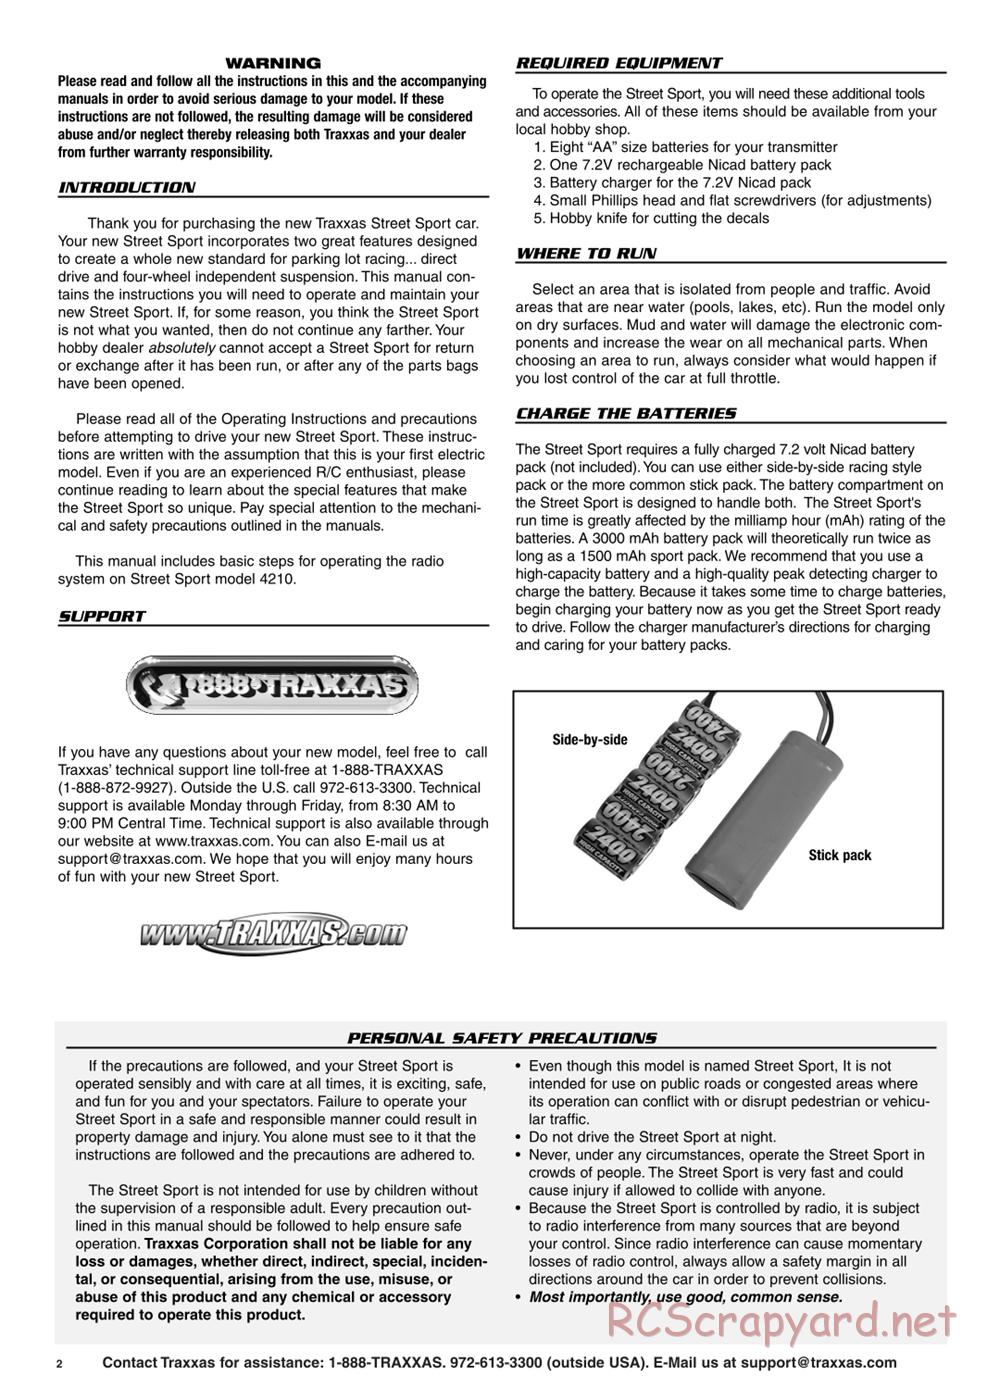 Traxxas - Street Sport - Manual - Page 2